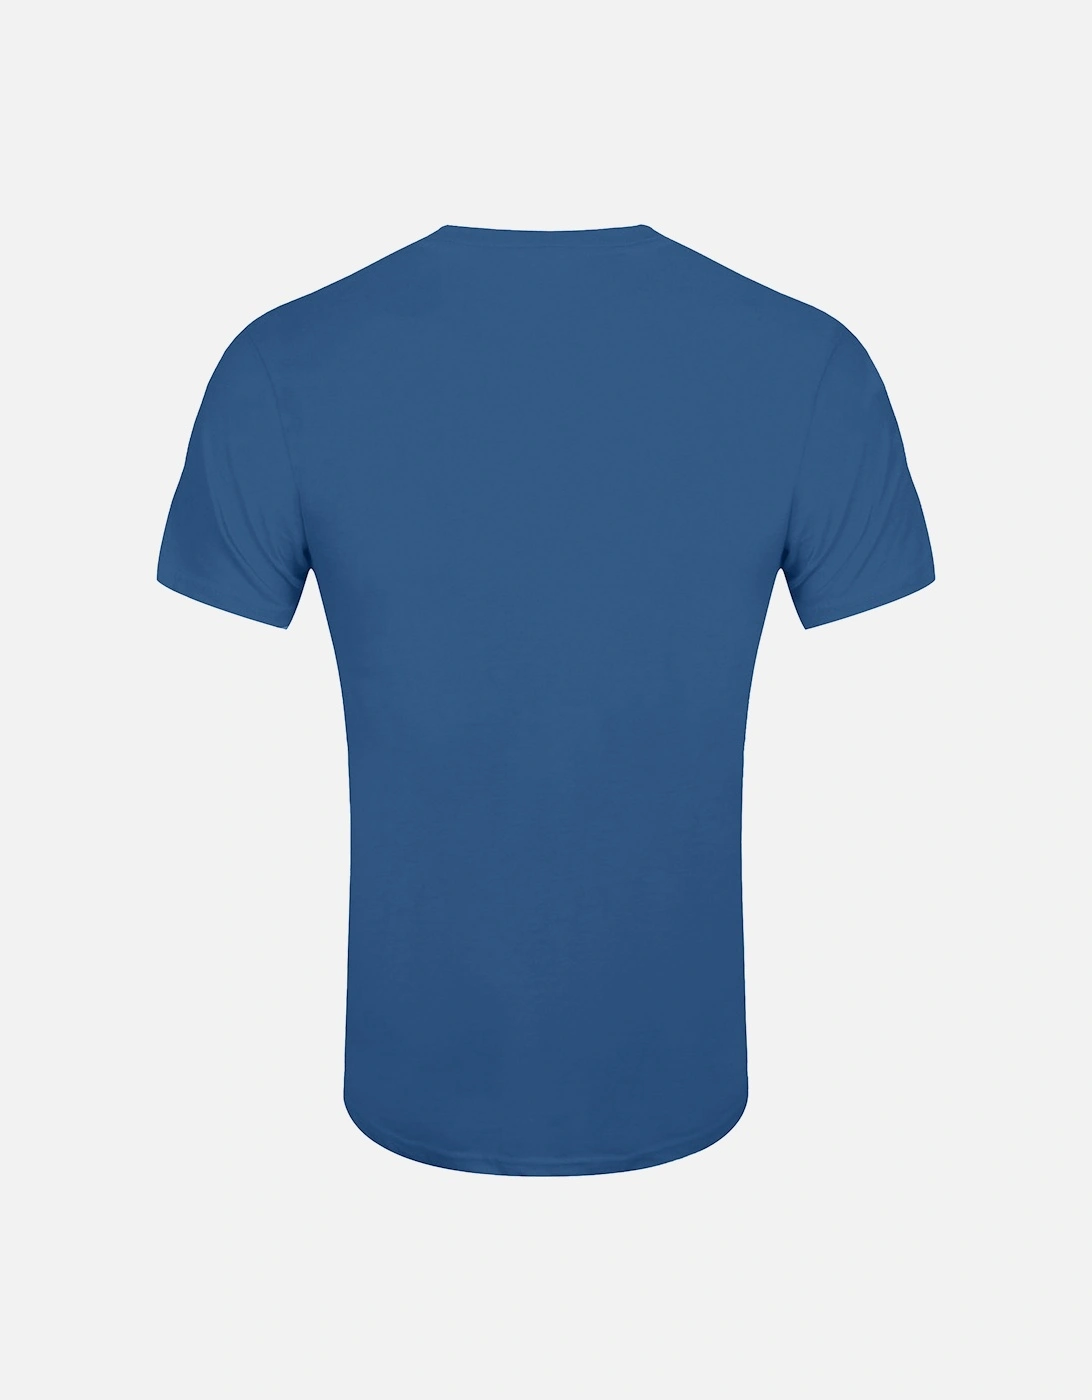 Unisex Adult Lightning Bolt T-Shirt